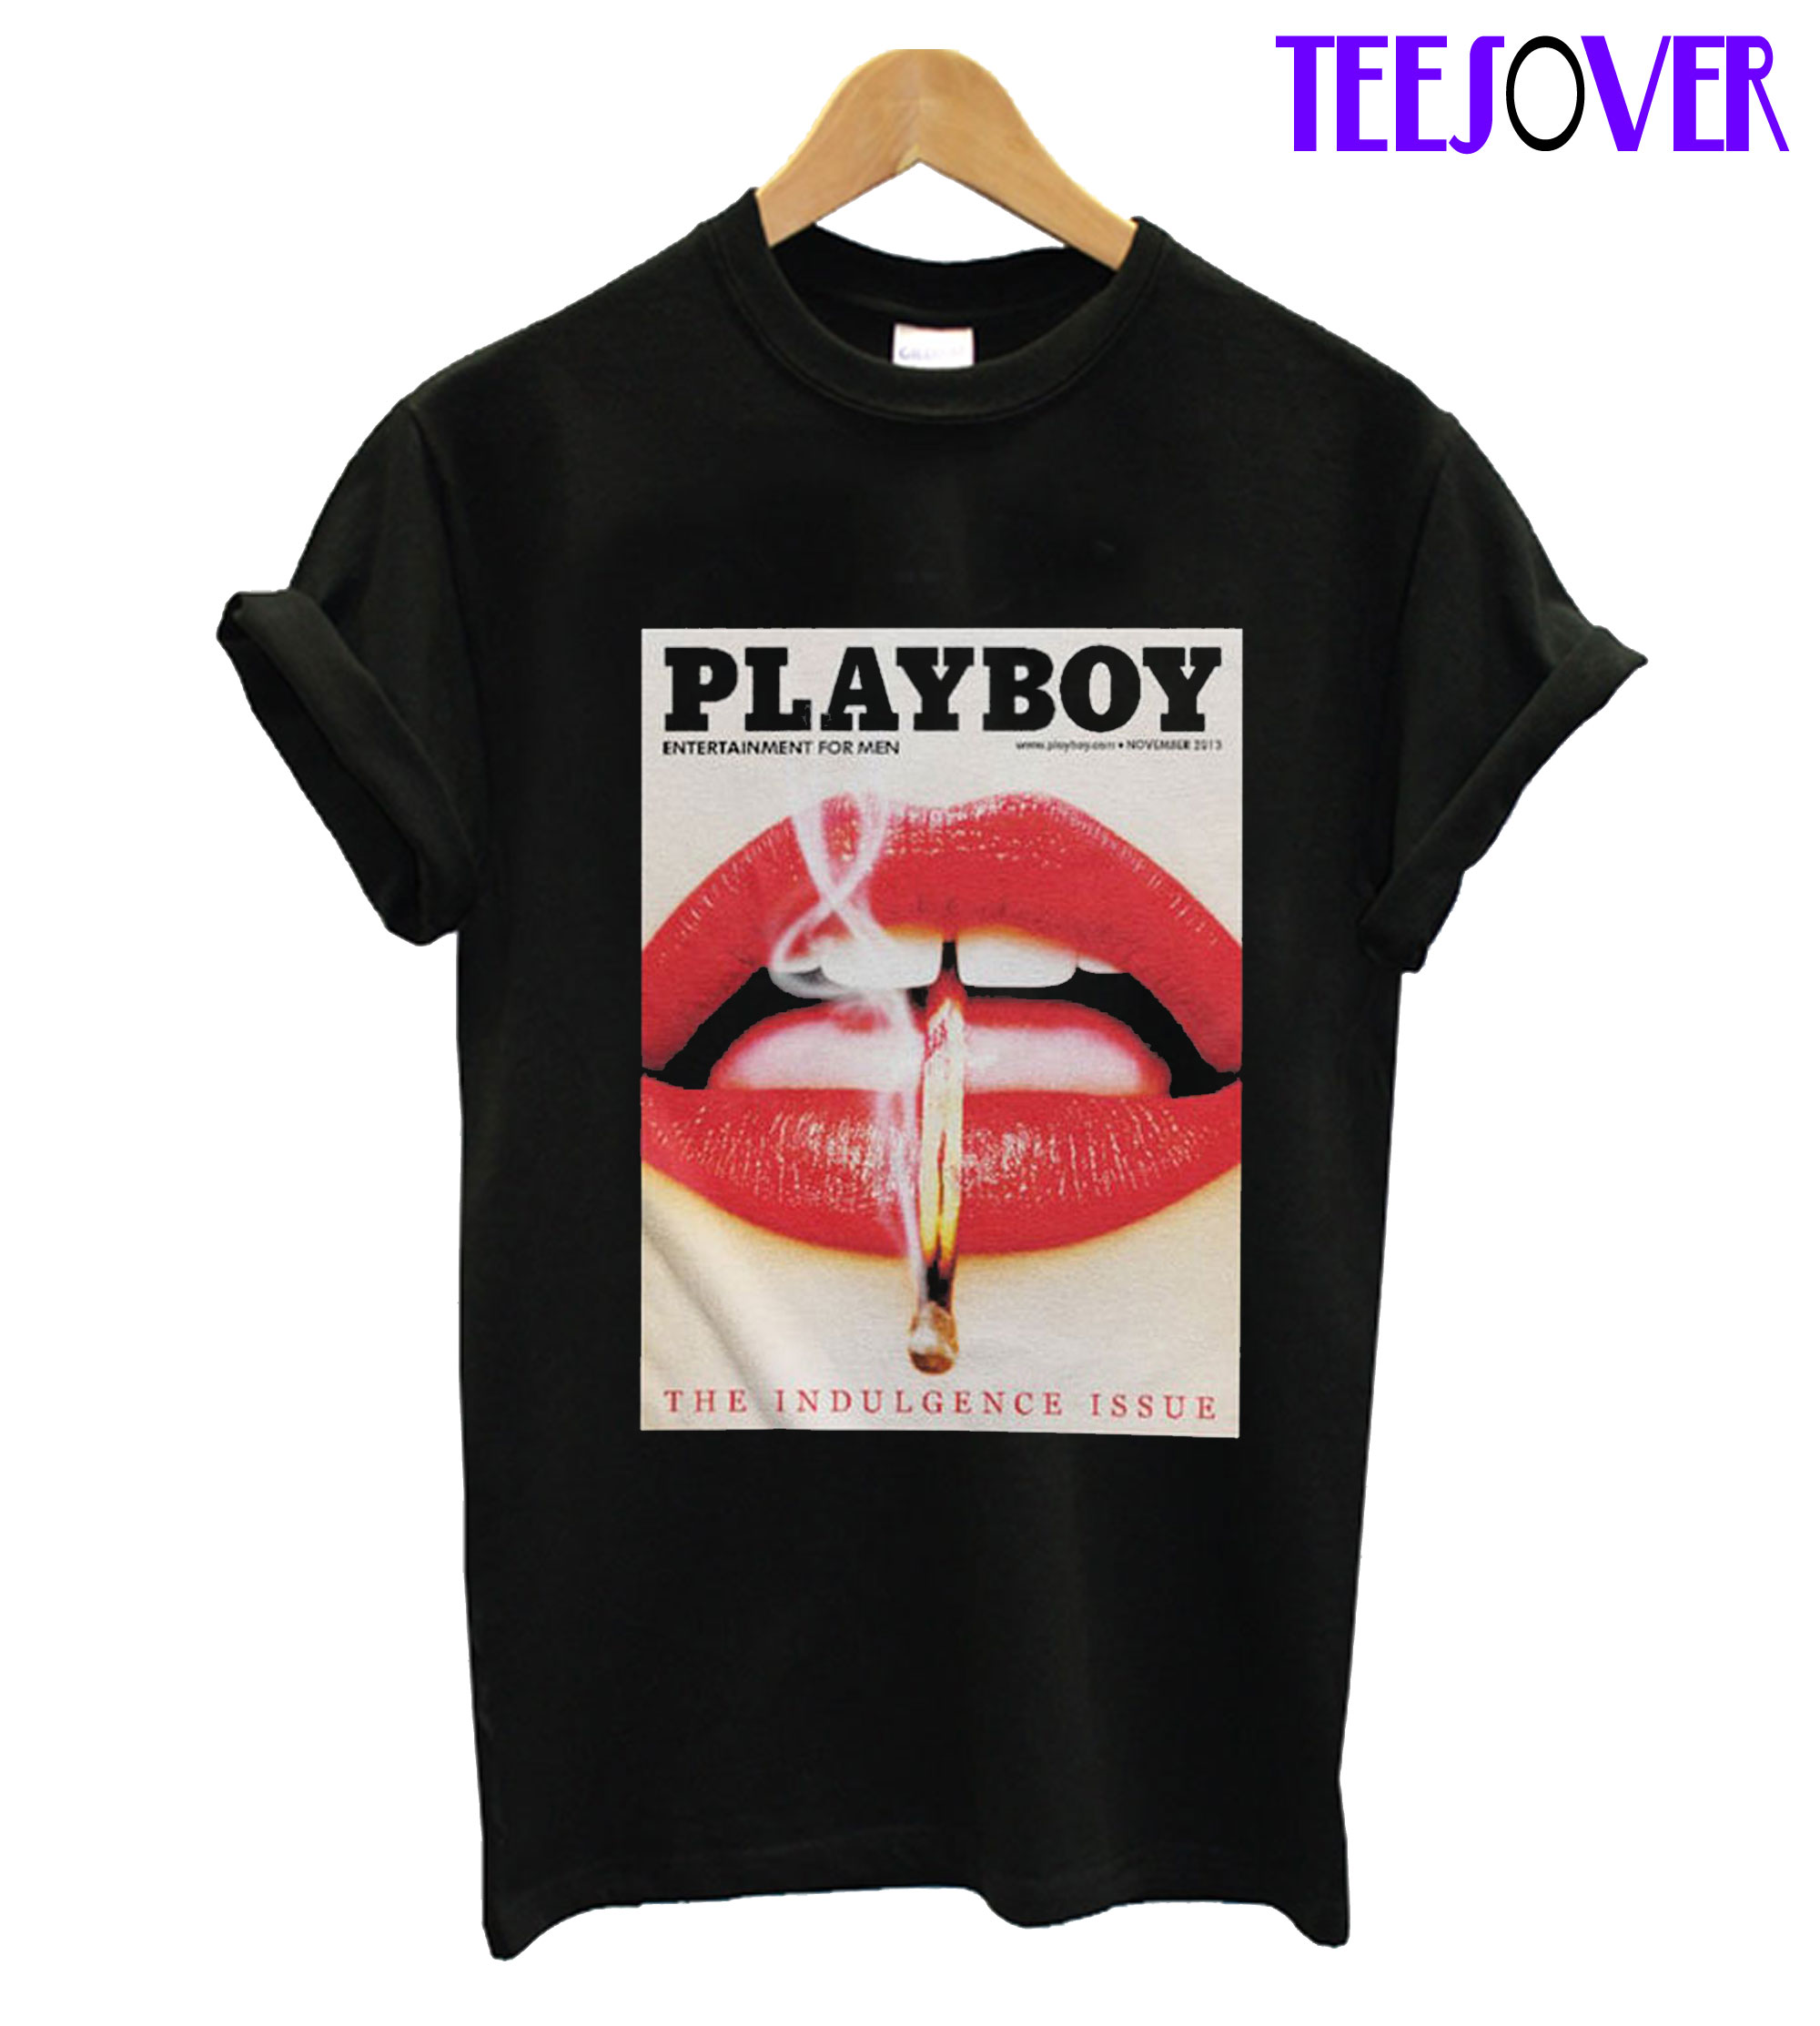 playboy plein shirt